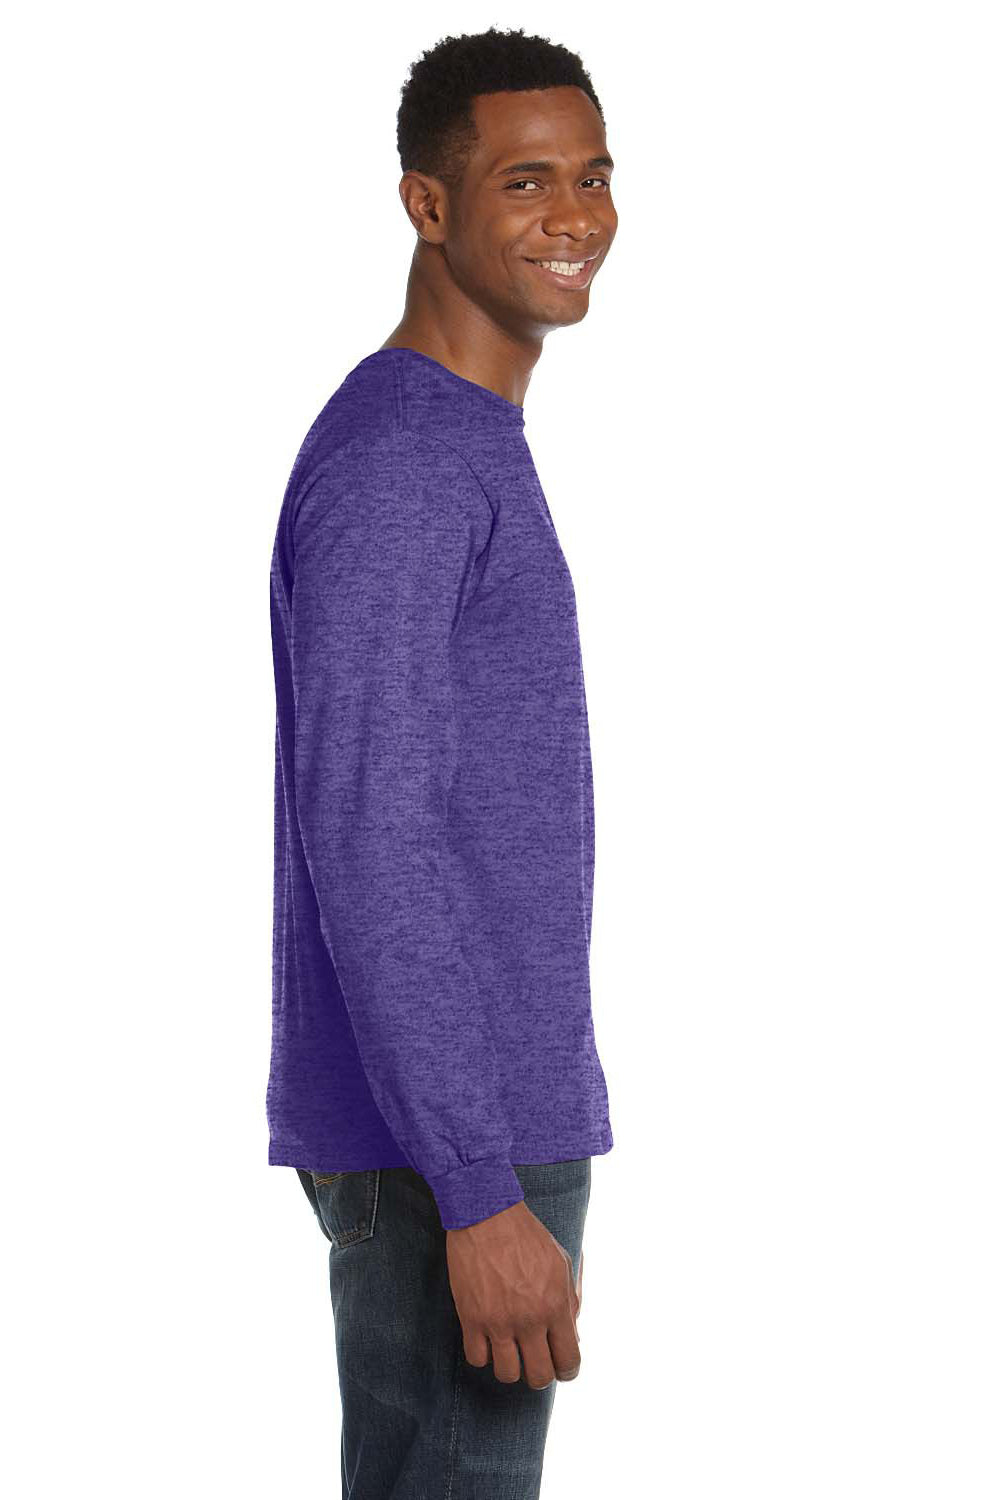 Anvil 949 Mens Long Sleeve Crewneck T-Shirt Heather Purple Side